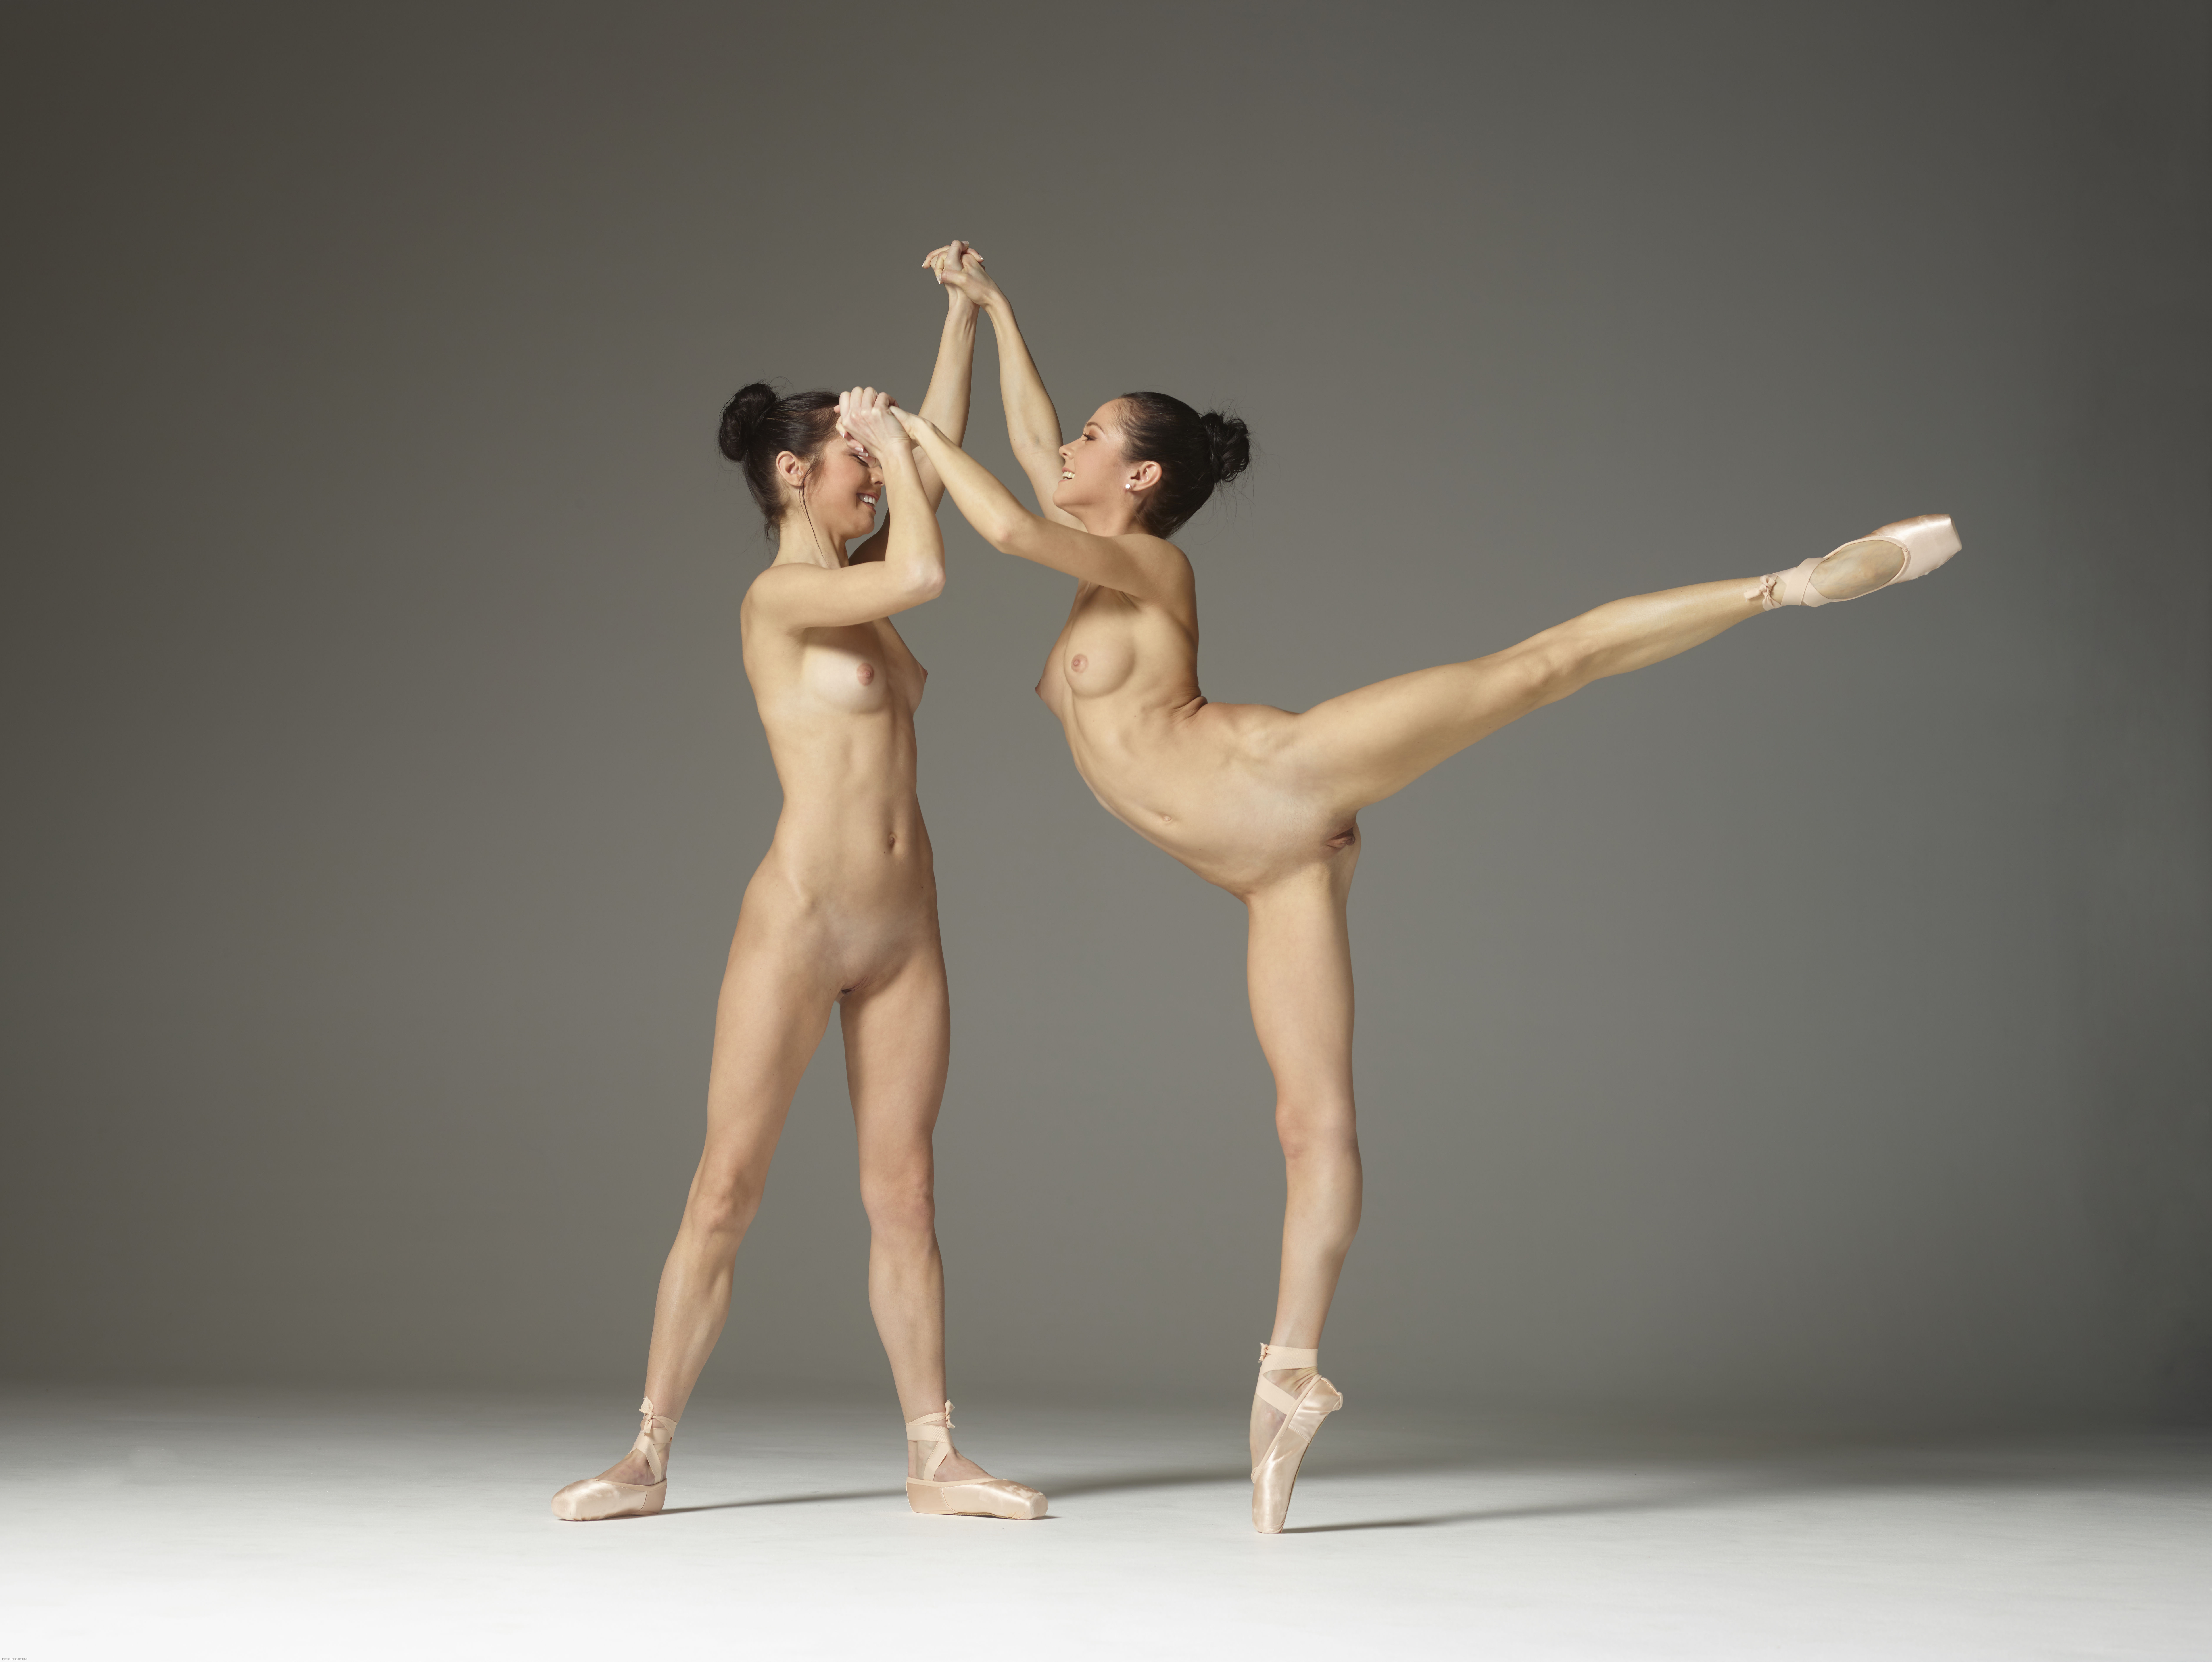 julietta-and-magdalena-naked-twins-ballet-36-10000px.jpg